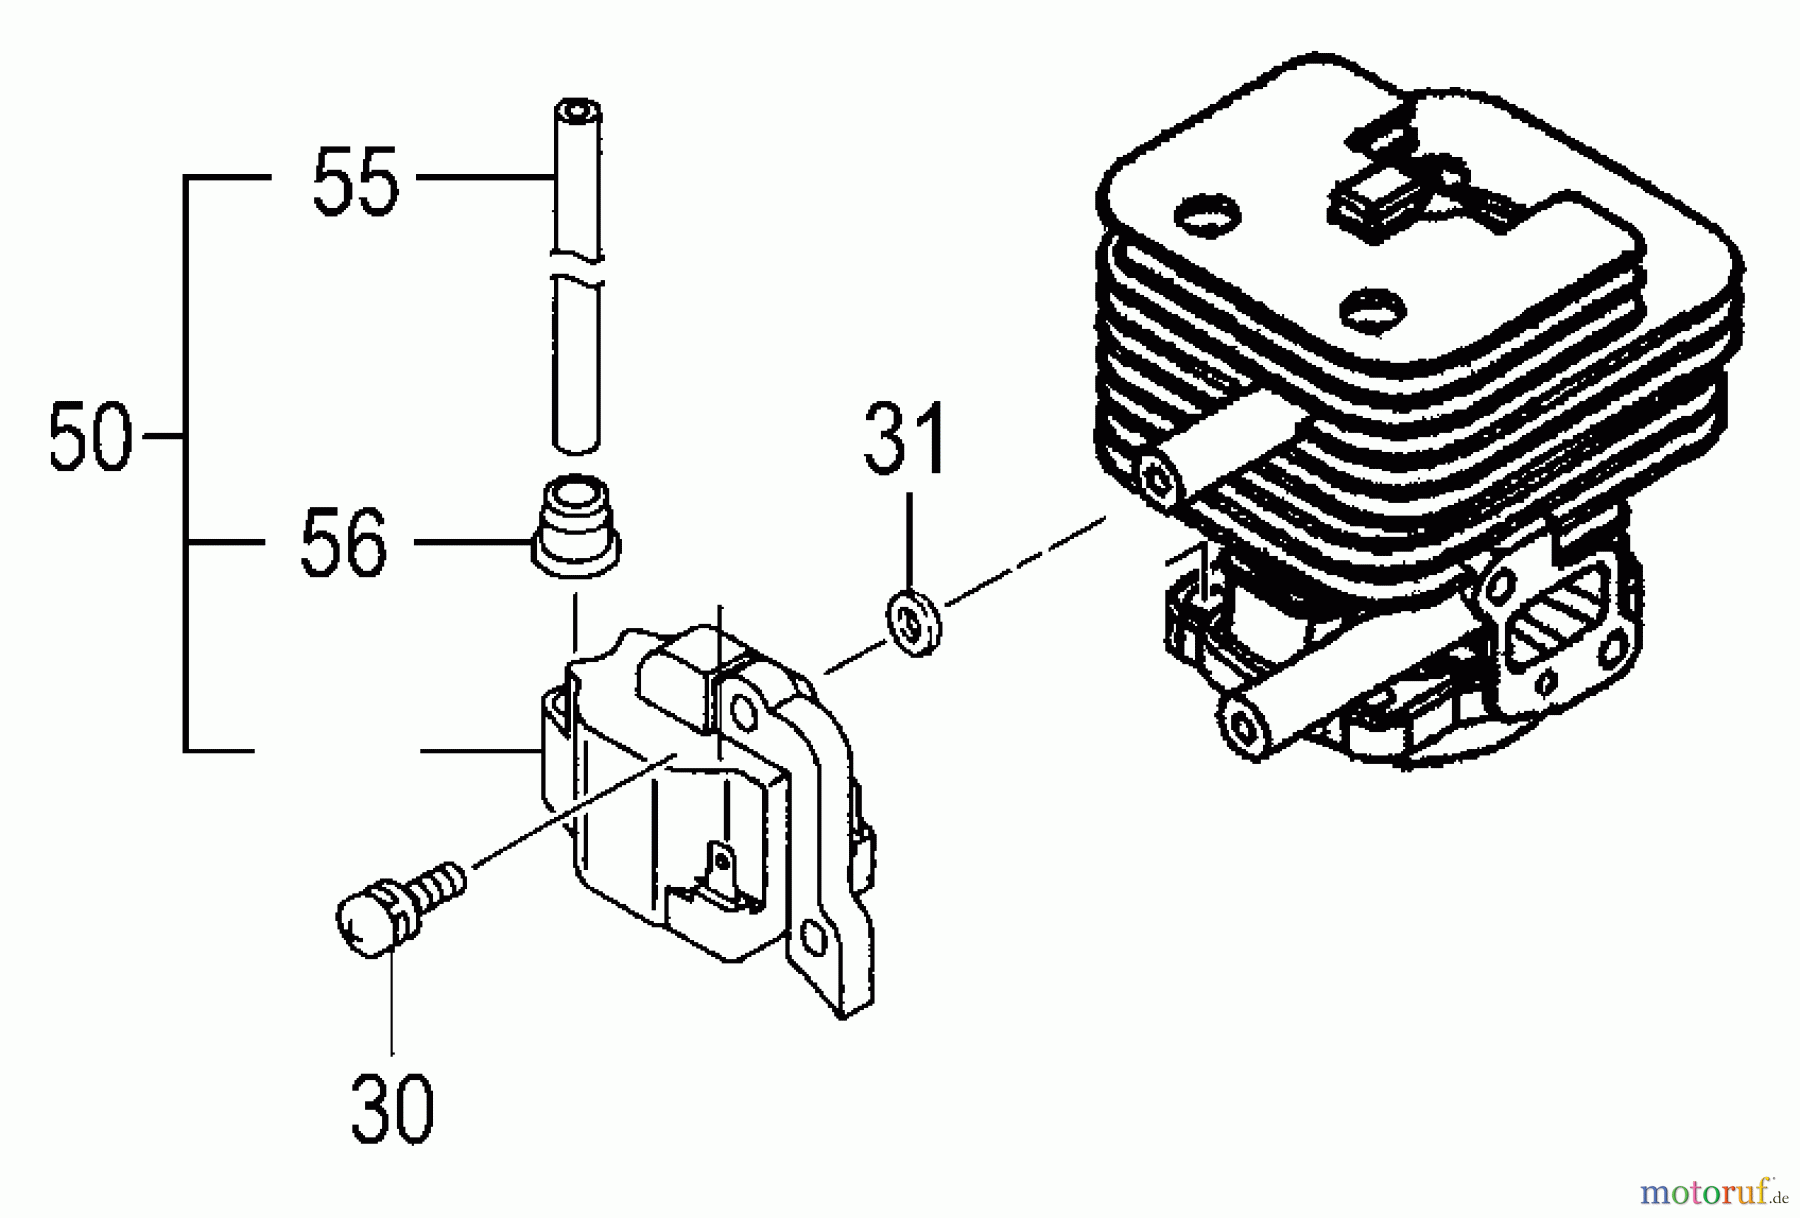  Tanaka Trimmer, Motorsensen TBC-340 - Tanaka Grass Trimmer / Brush Cutter Ignition Coil /Washers